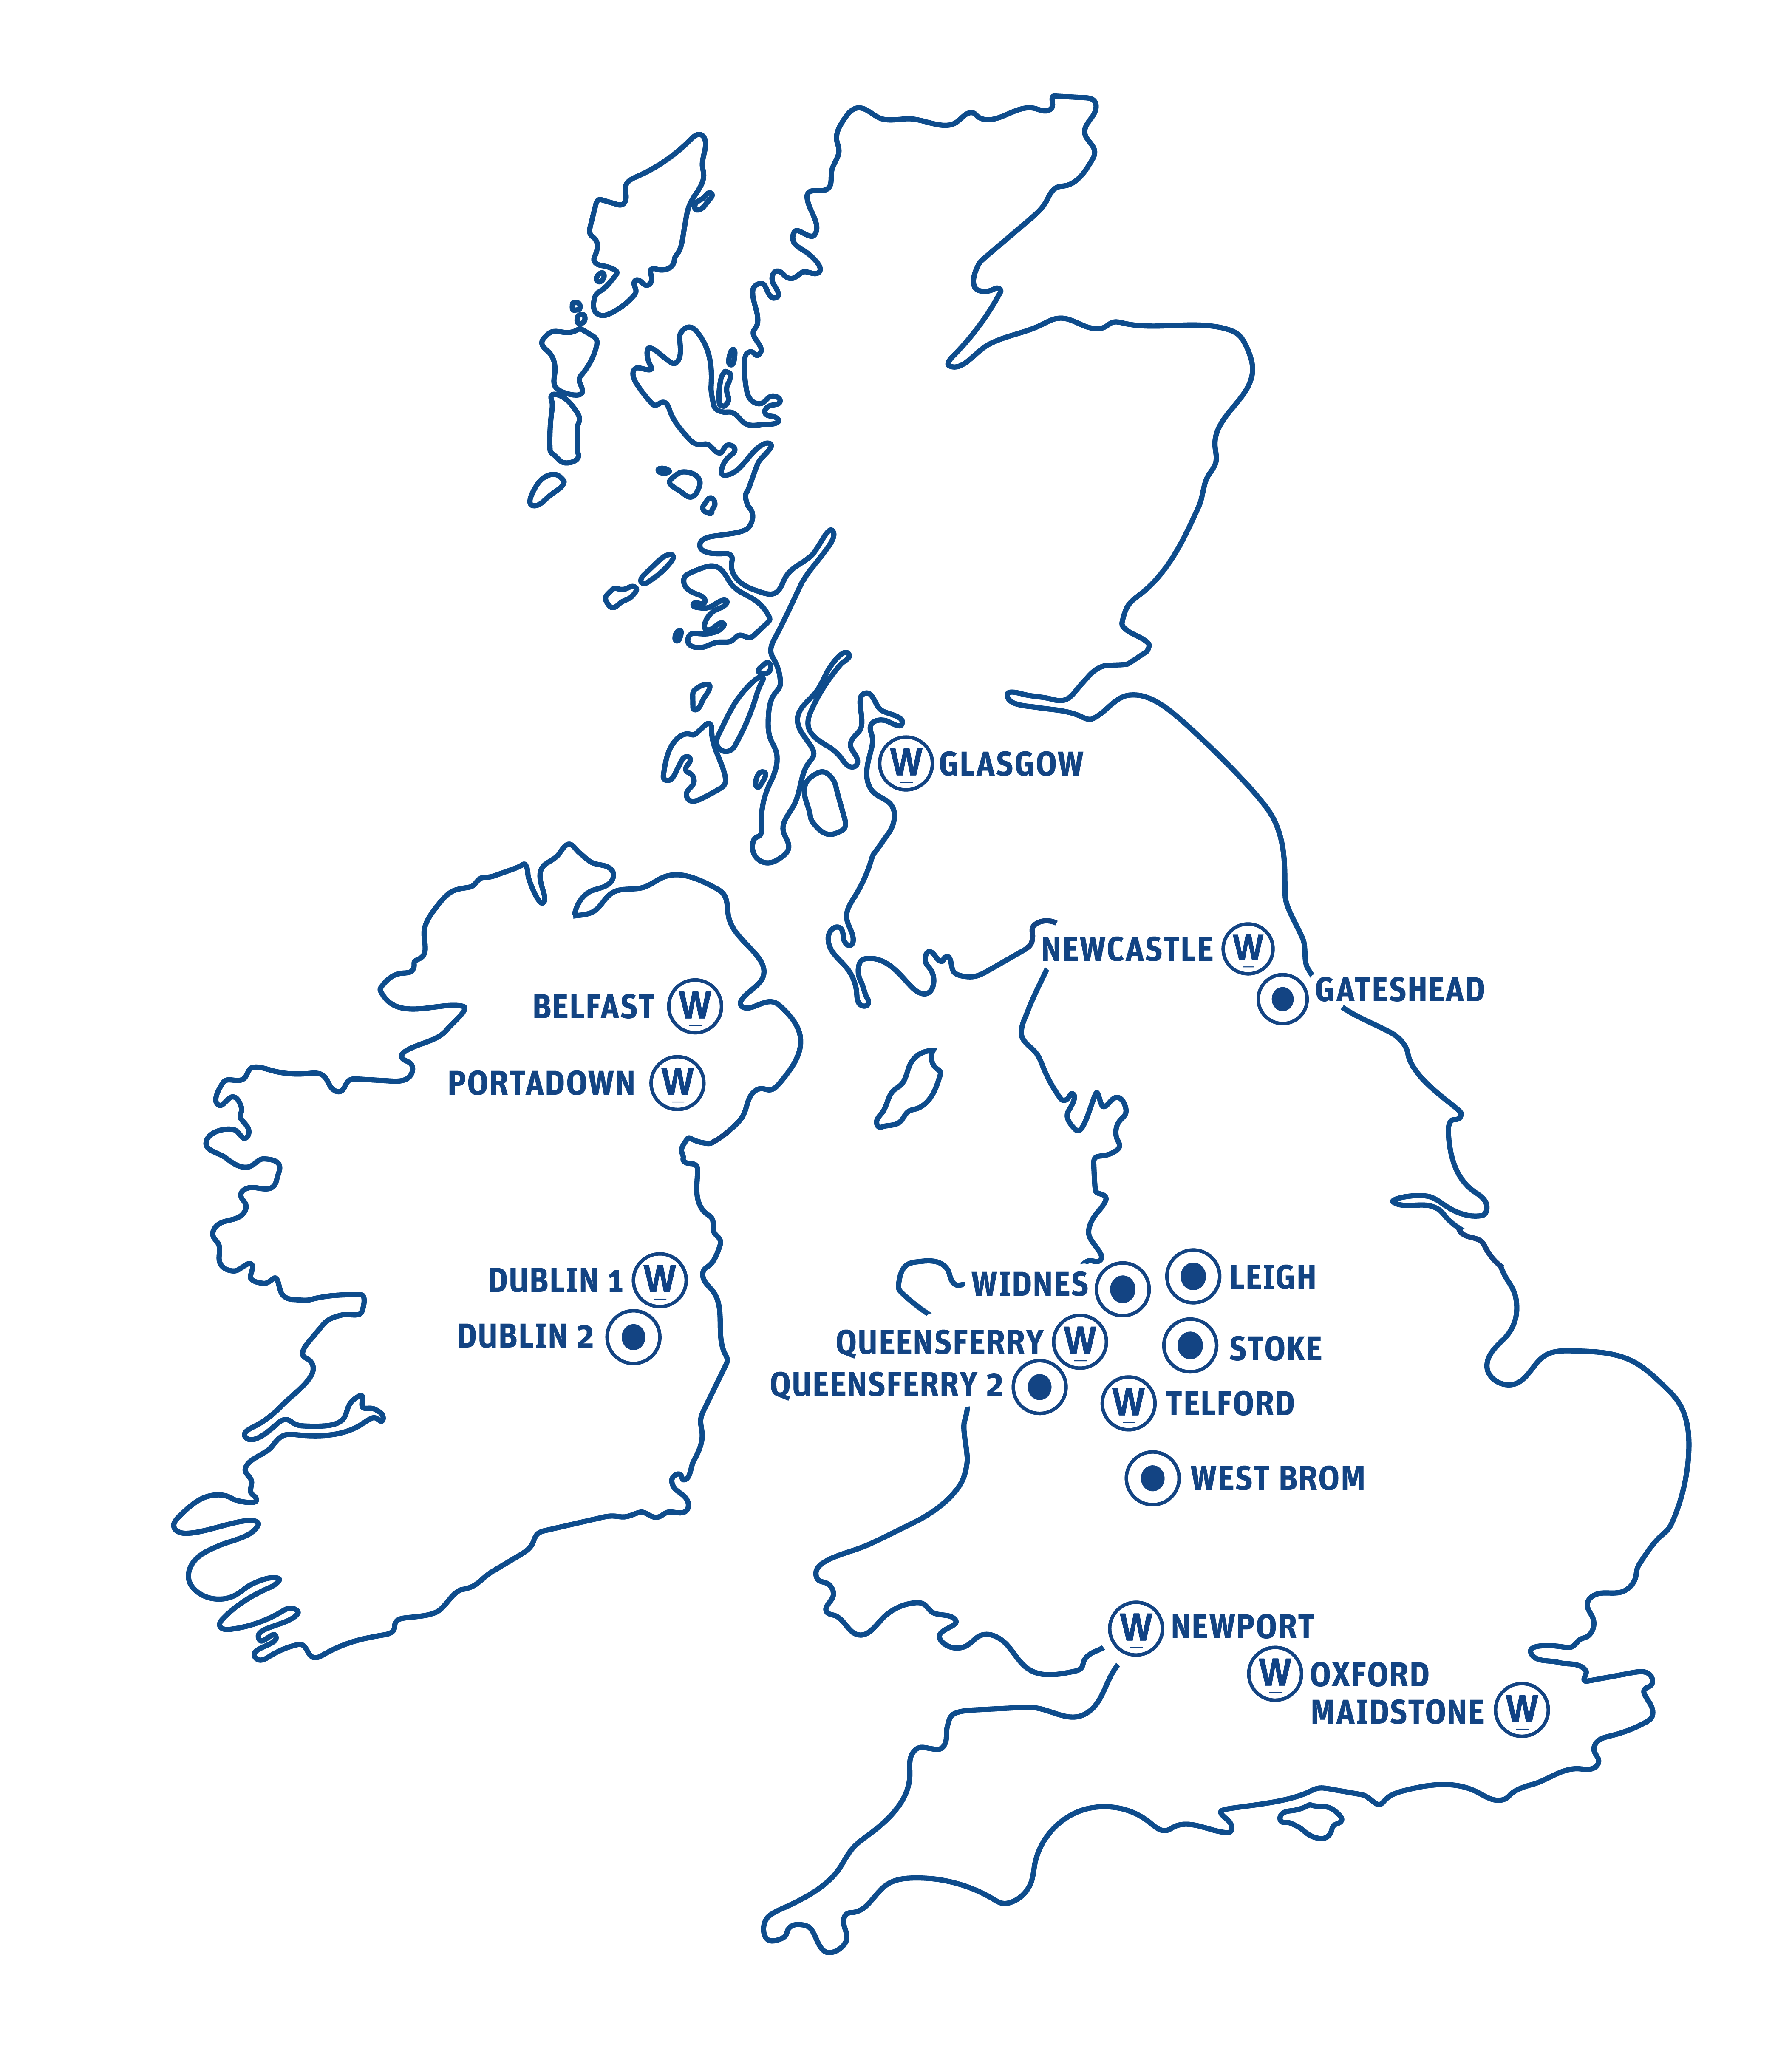 wilsons locations map